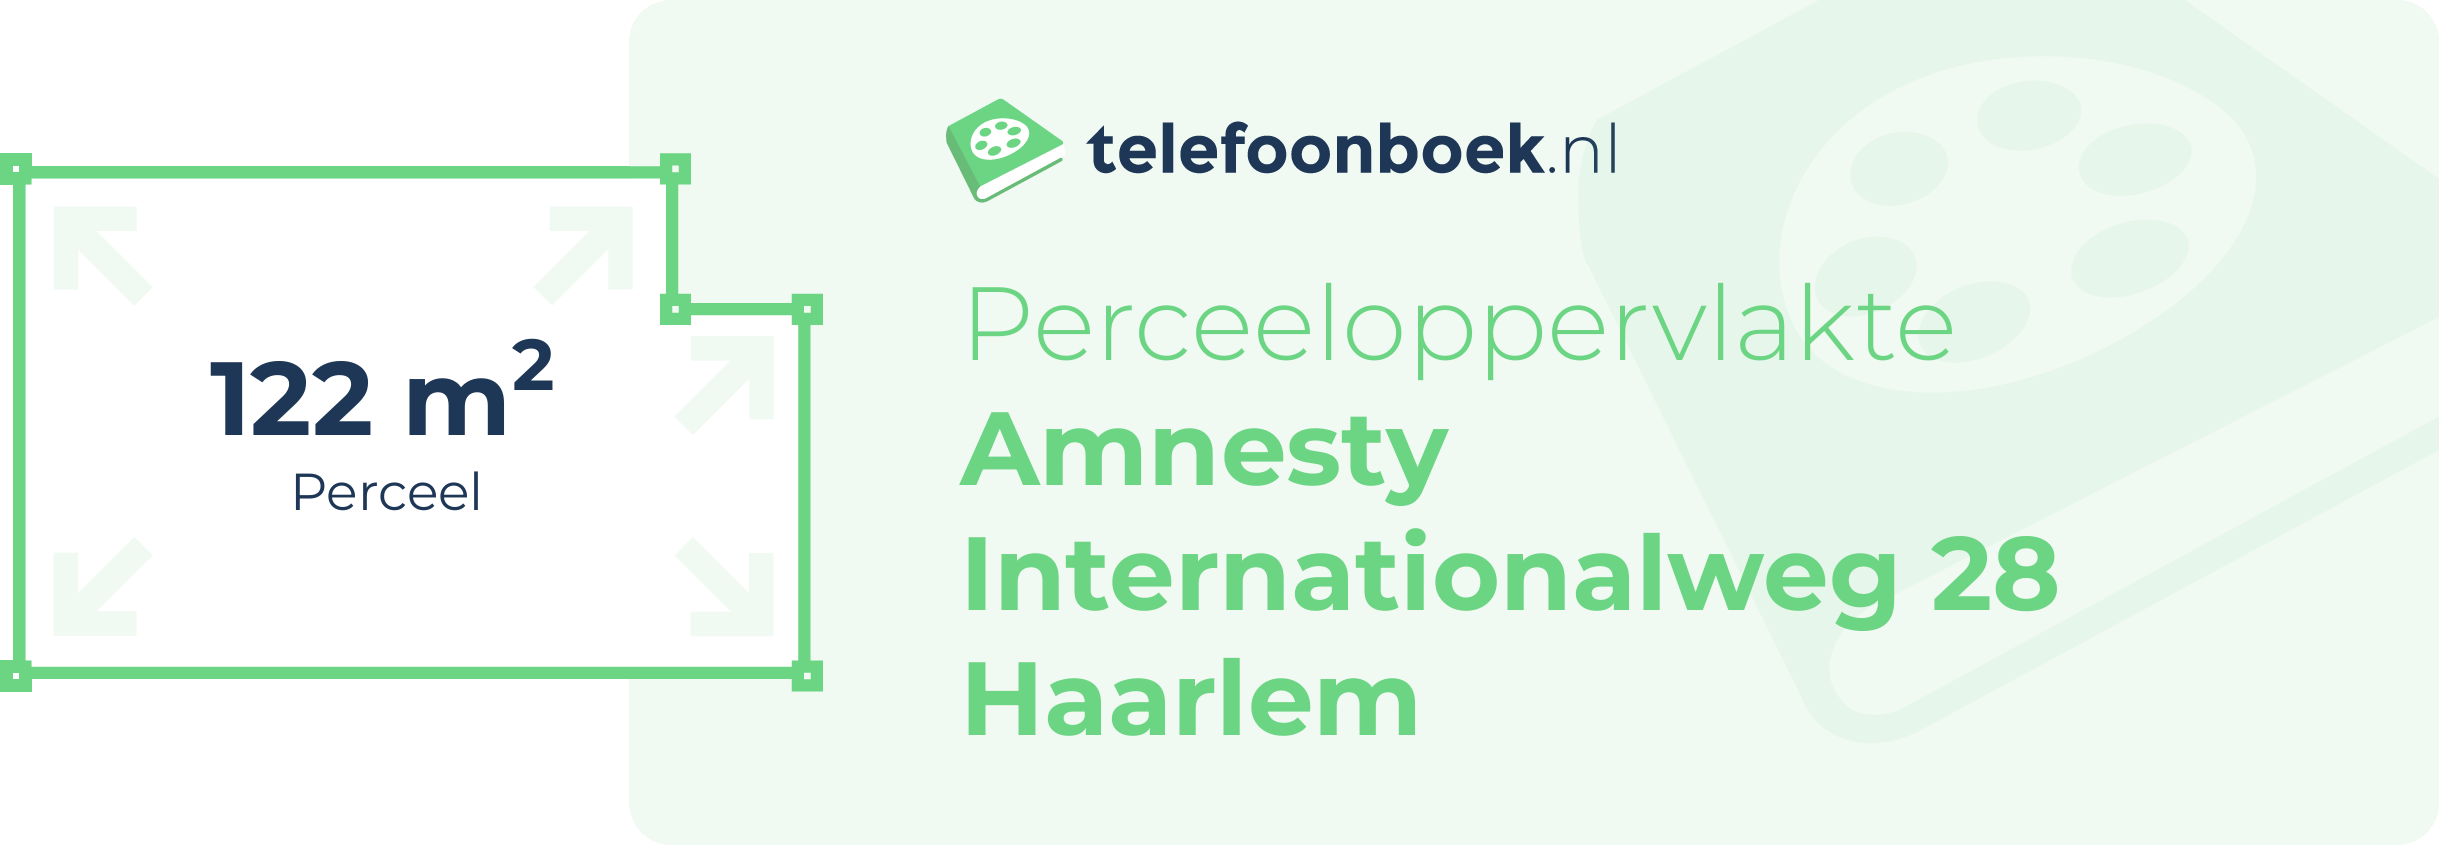 Perceeloppervlakte Amnesty Internationalweg 28 Haarlem